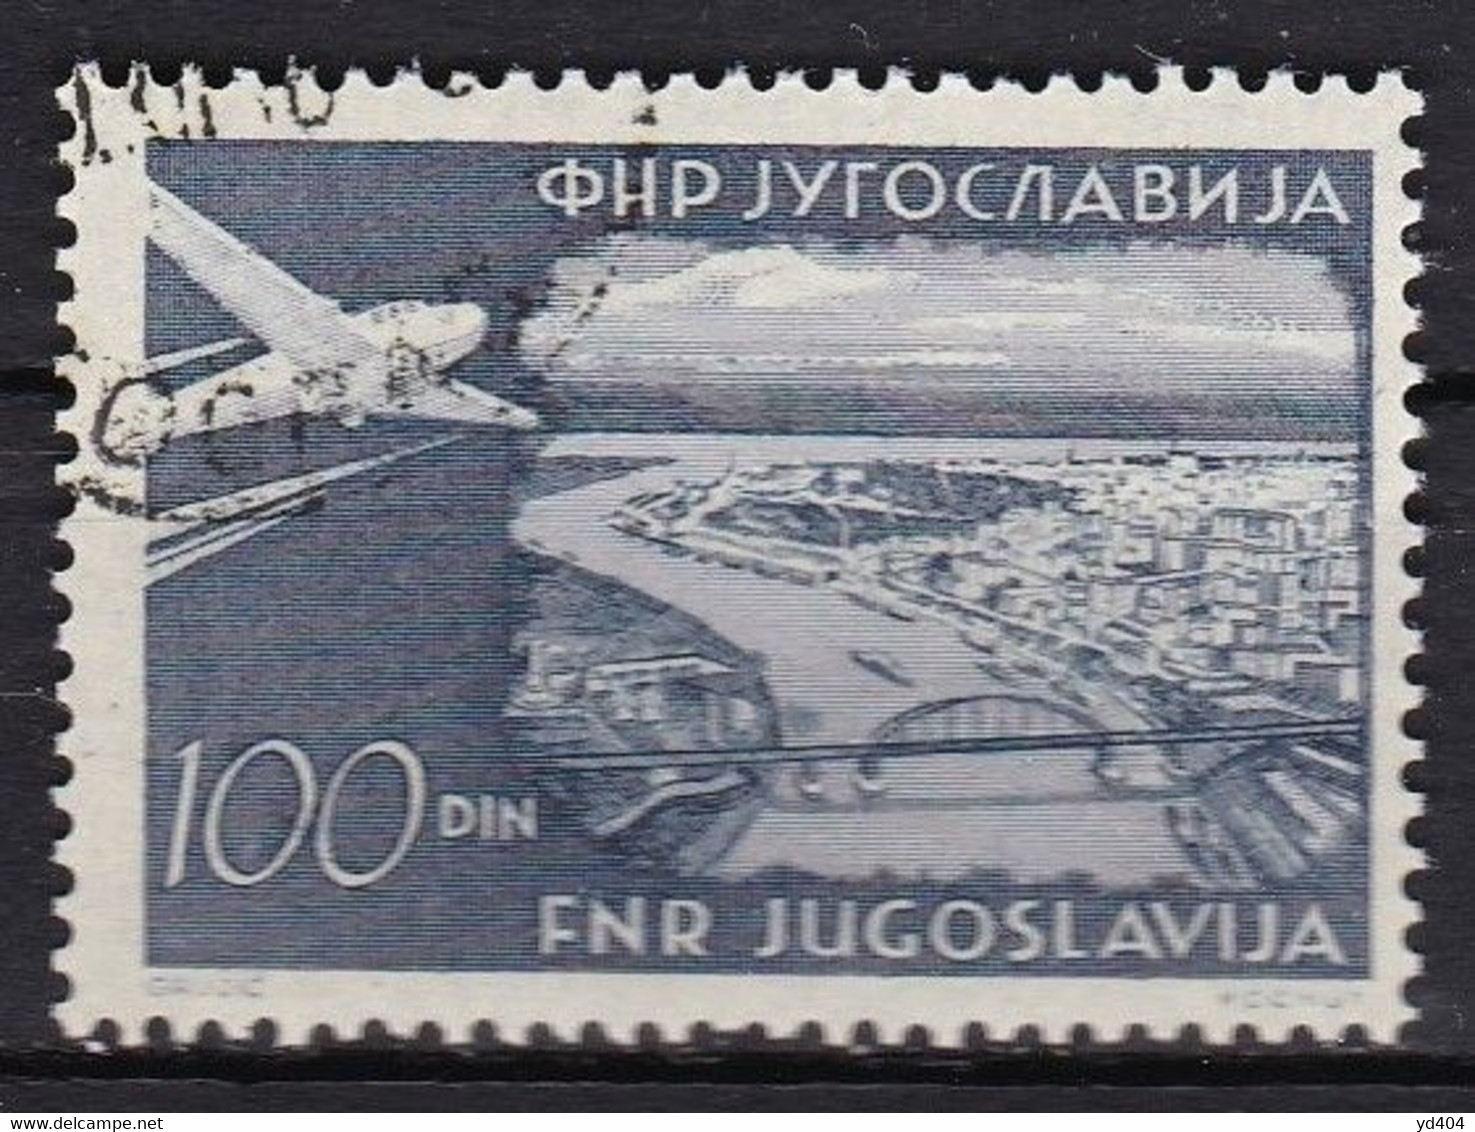 YU409 – YOUGOSLAVIA – AIRMAIL – 1951 – PLANE OVER BELGRADE – Y&T # 40 USED 22 € - Luftpost